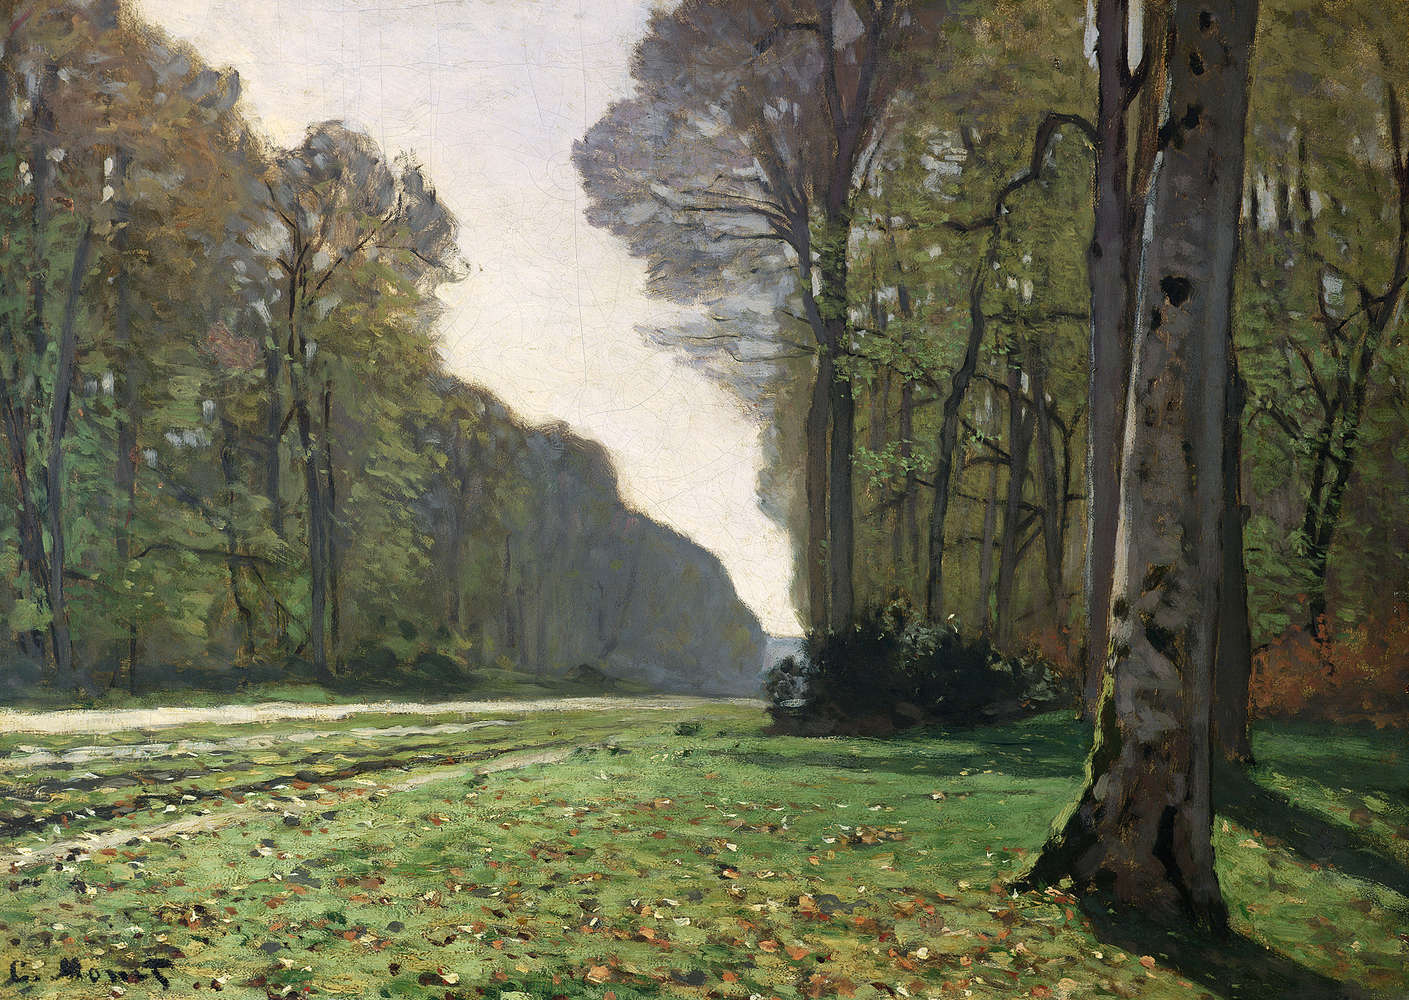             Fotomurali "La strada per BasBreauFontainebleau" di Claude Monet
        